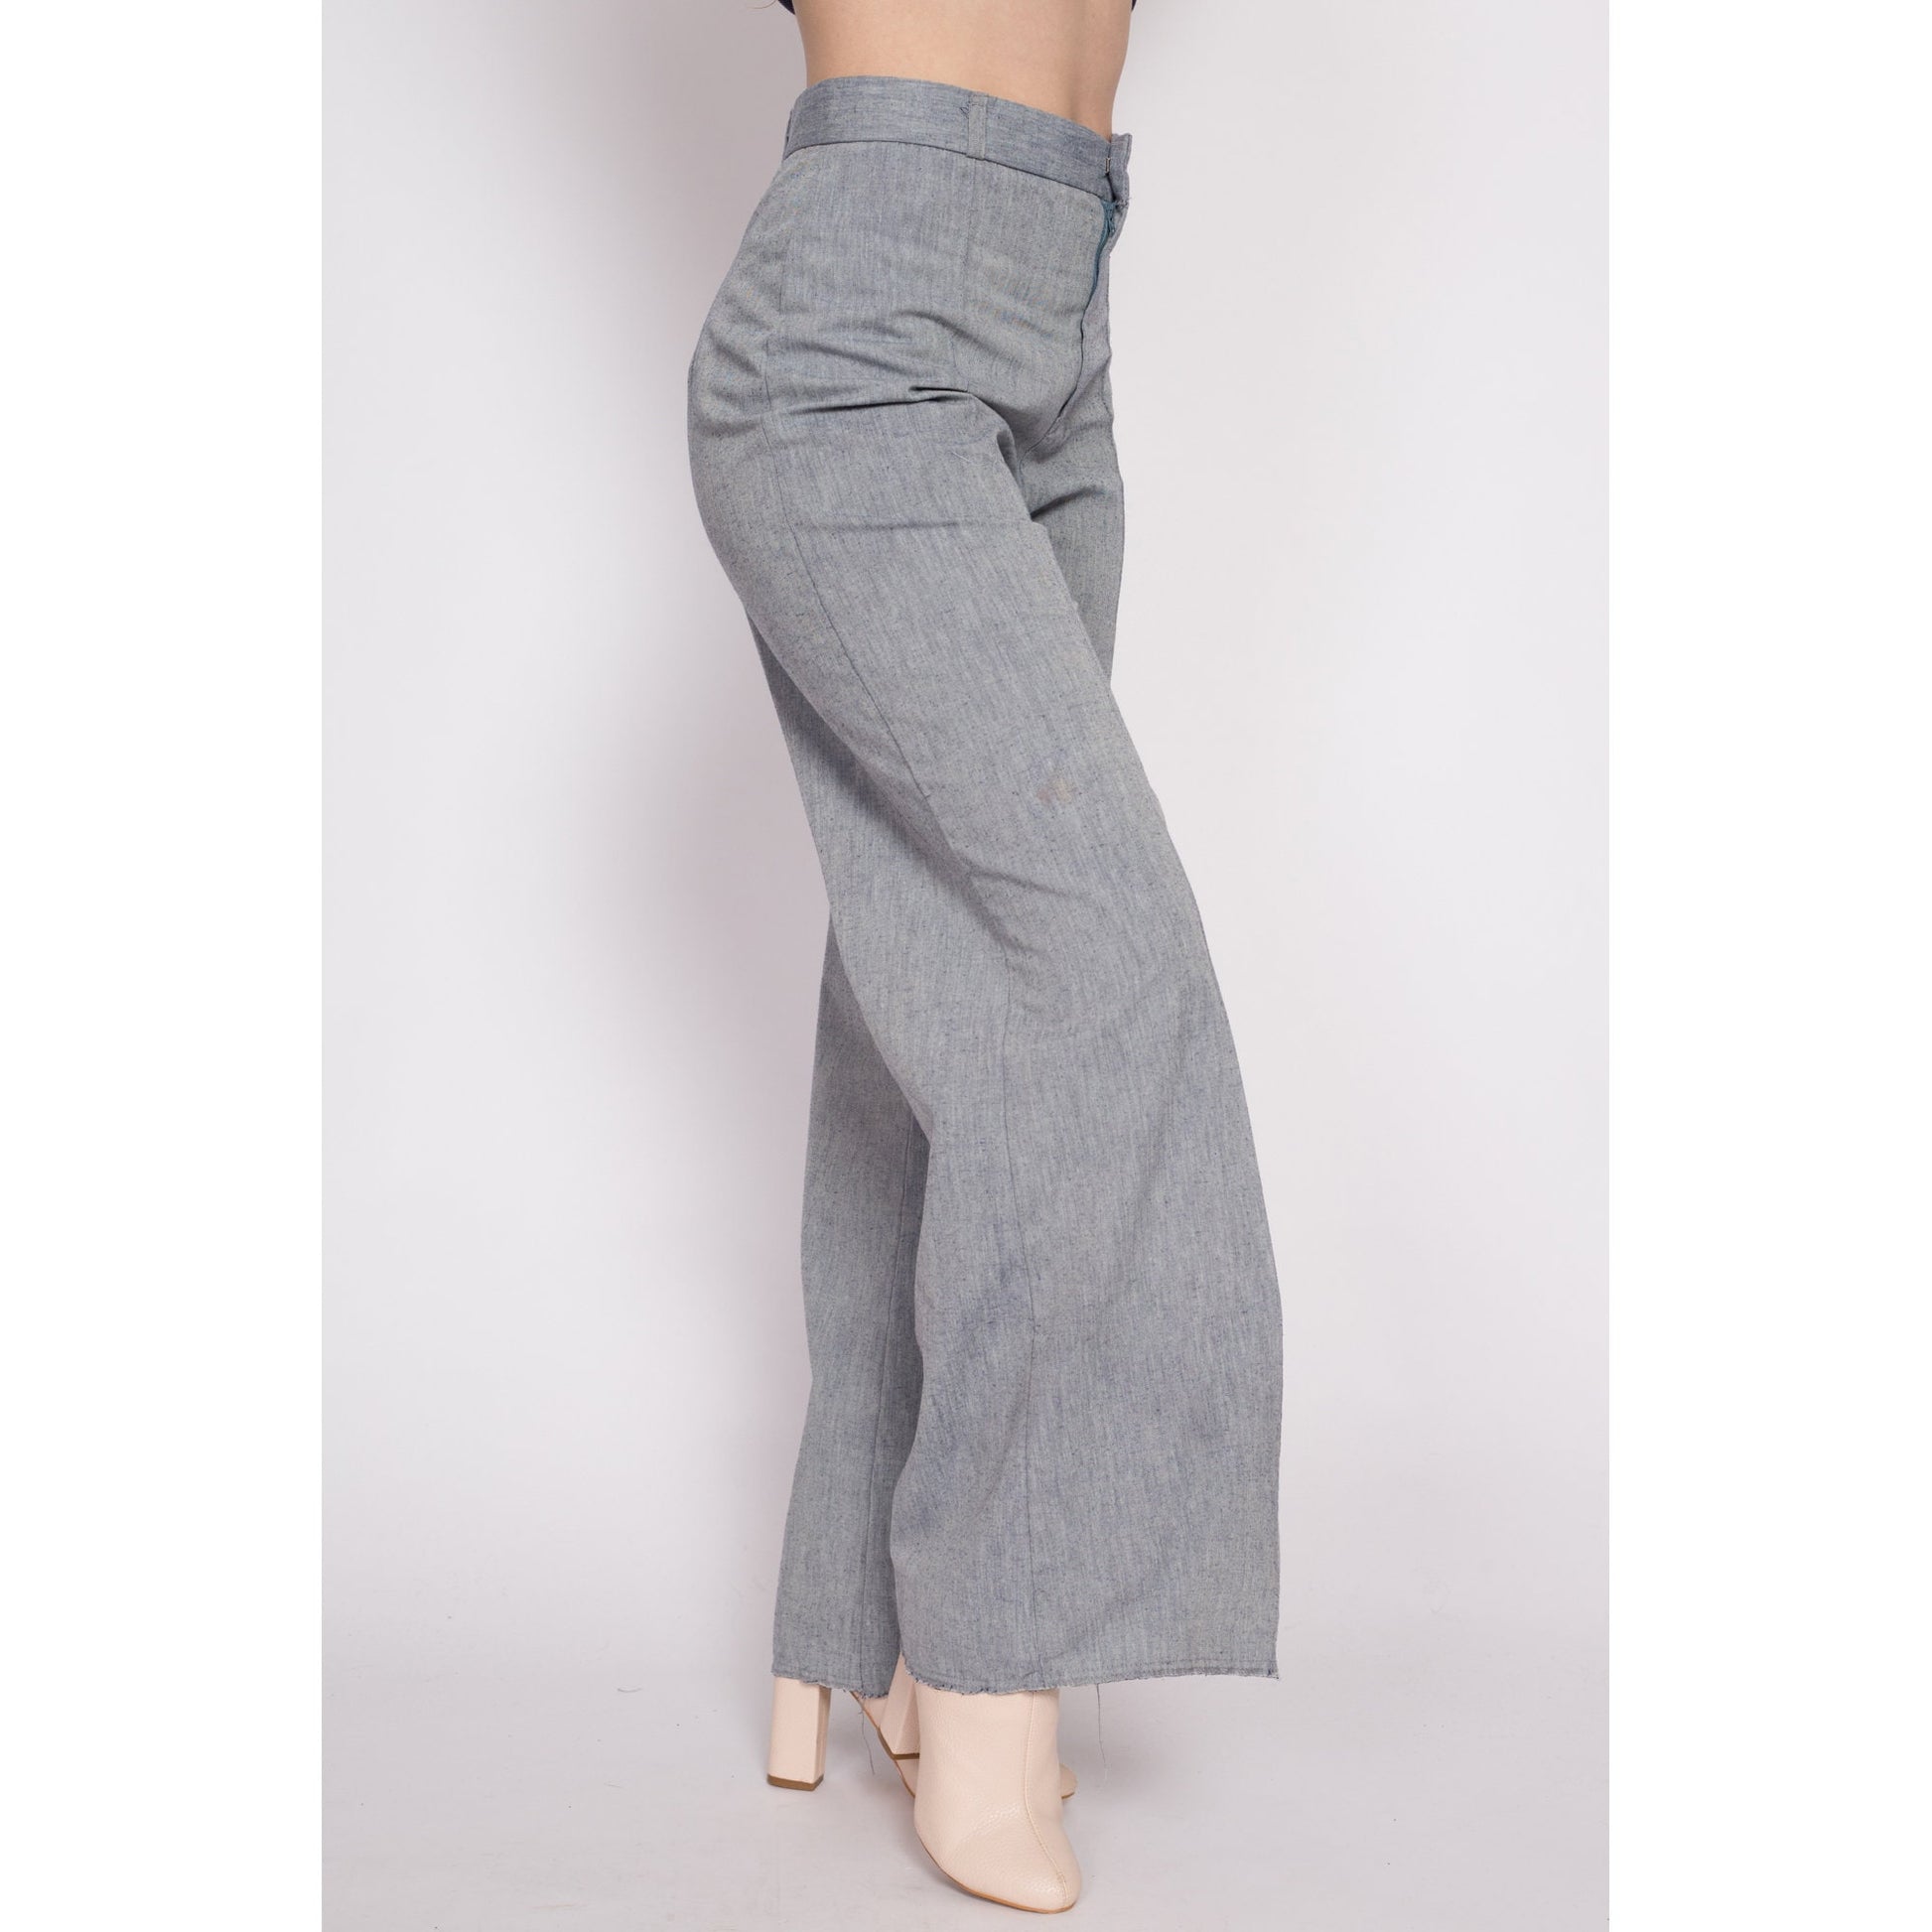 70s Grey High Waisted Wide Leg Pants - Medium, 28 – Flying Apple Vintage